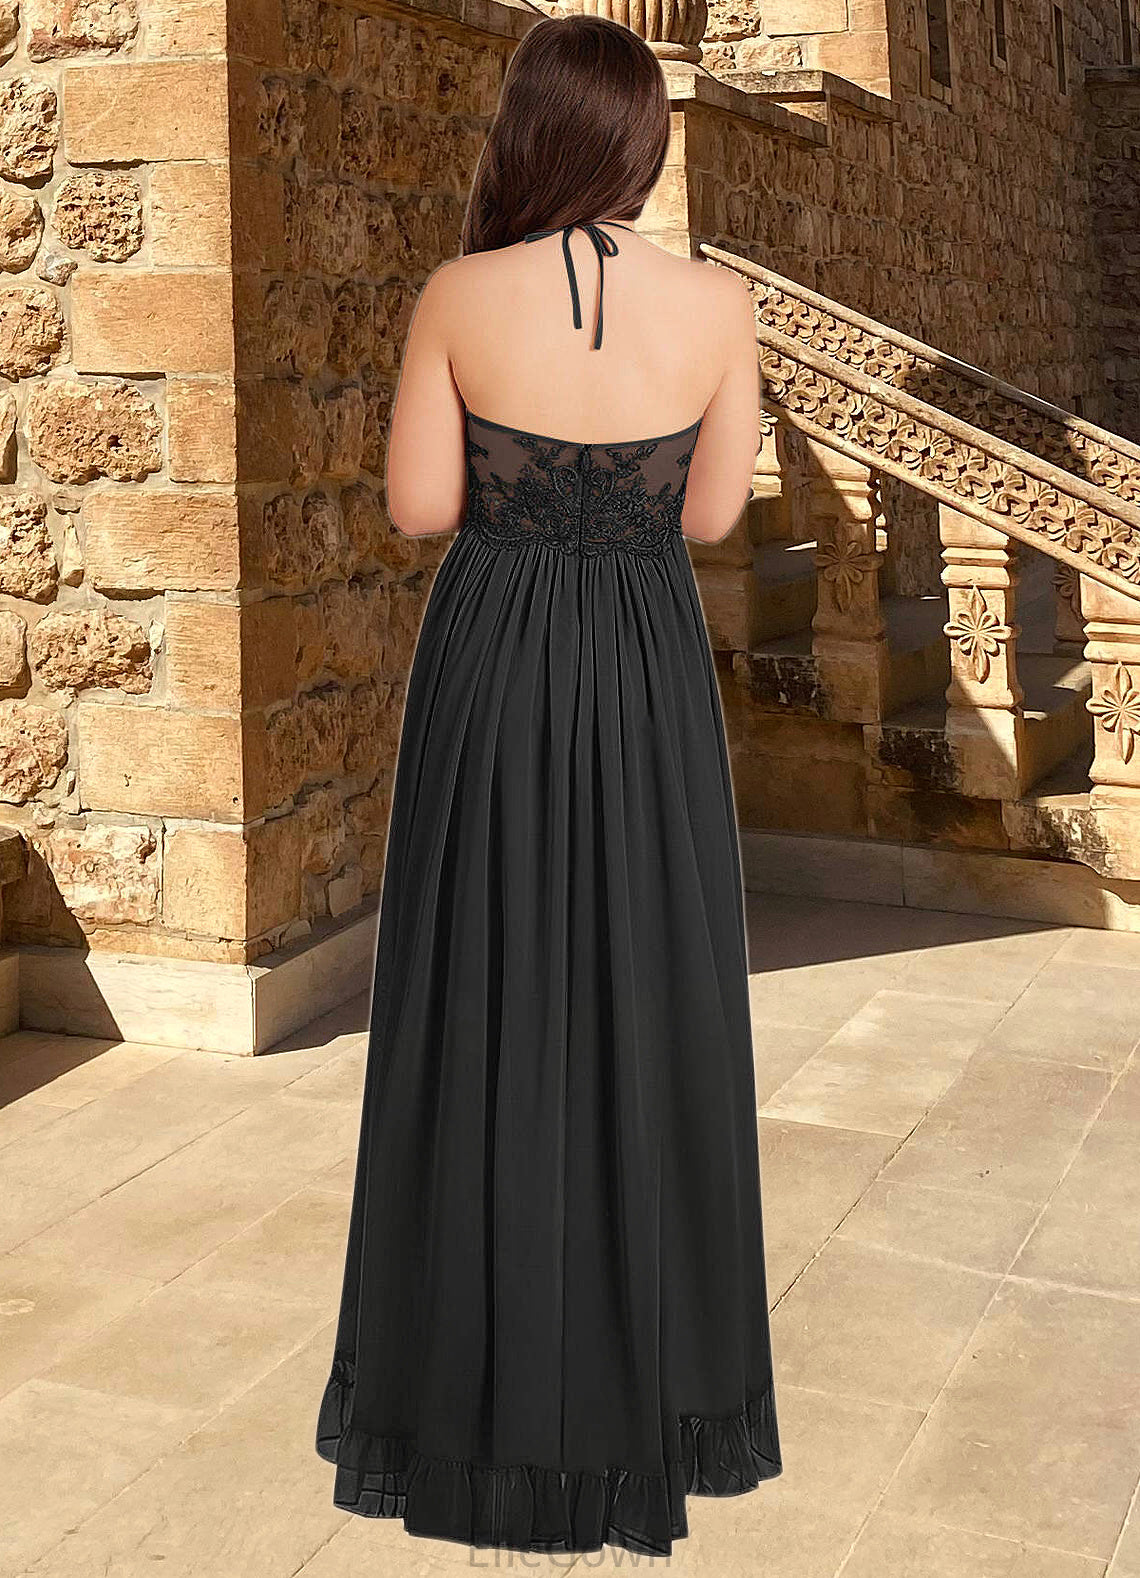 Tamia A-Line Lace Chiffon Asymmetrical Junior Bridesmaid Dress black DEP0022855